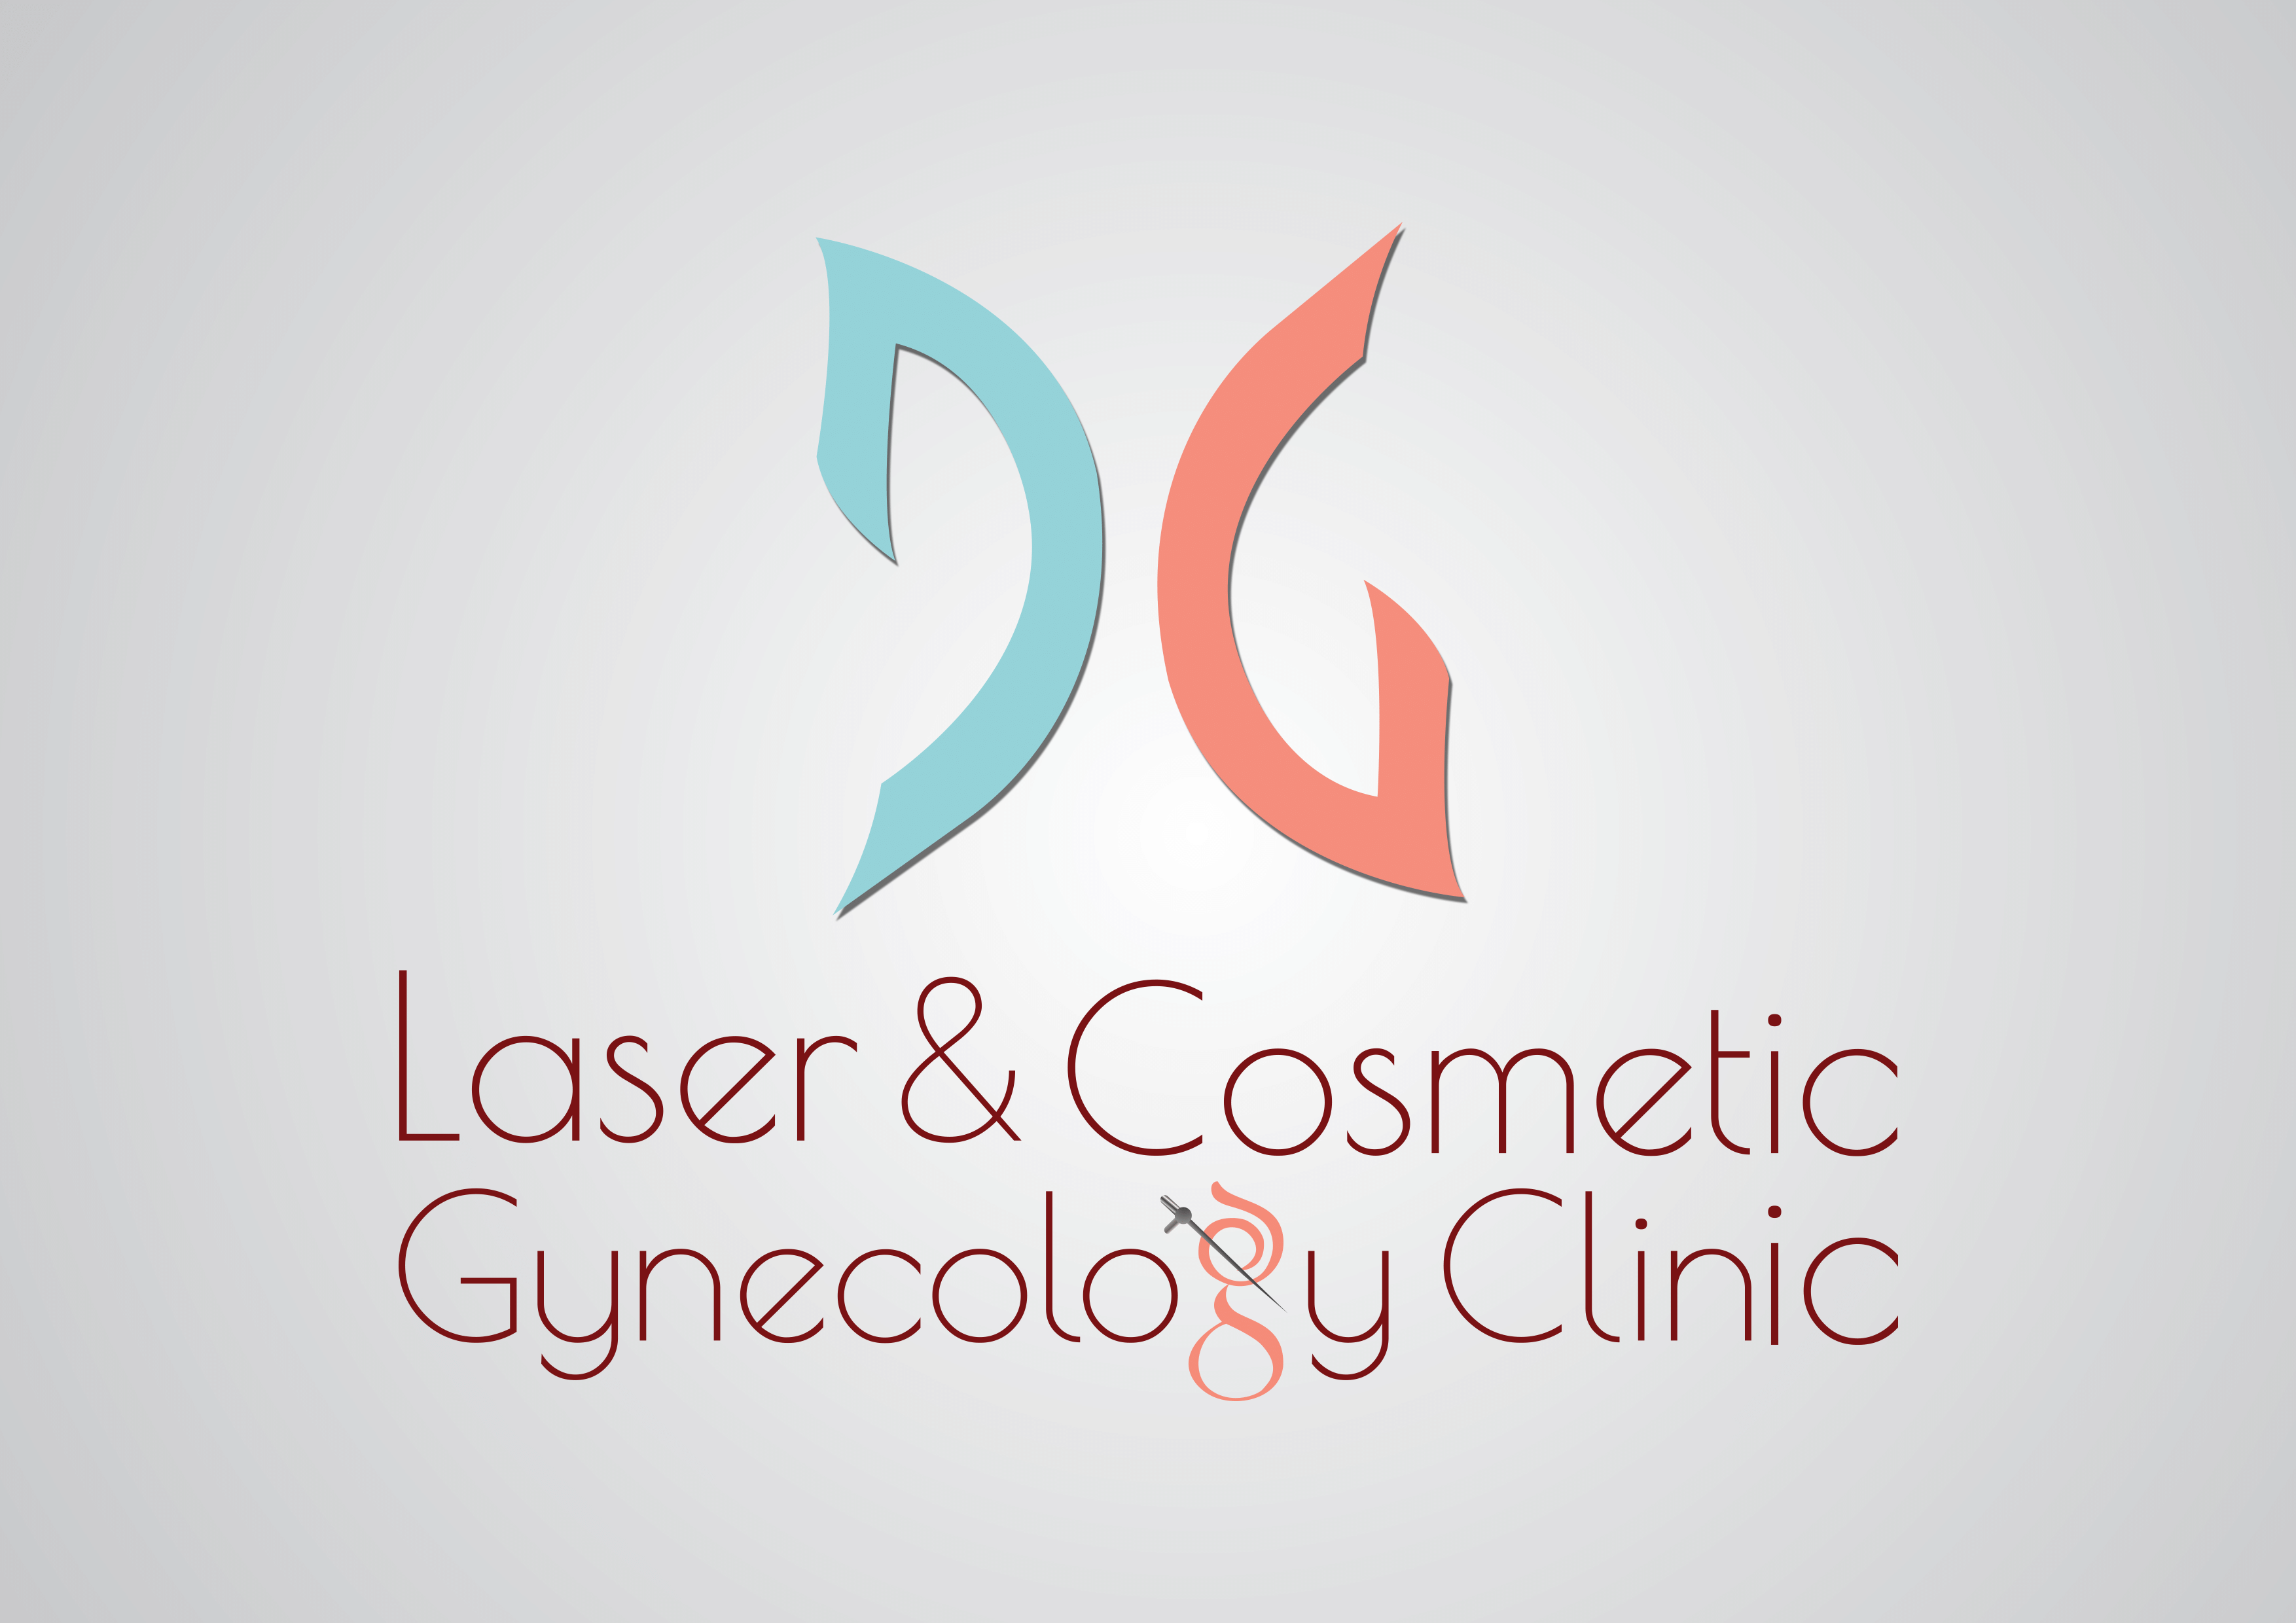 Mons Liposculpturing in Chennai  DG Laser & Cosmetic Gynecology